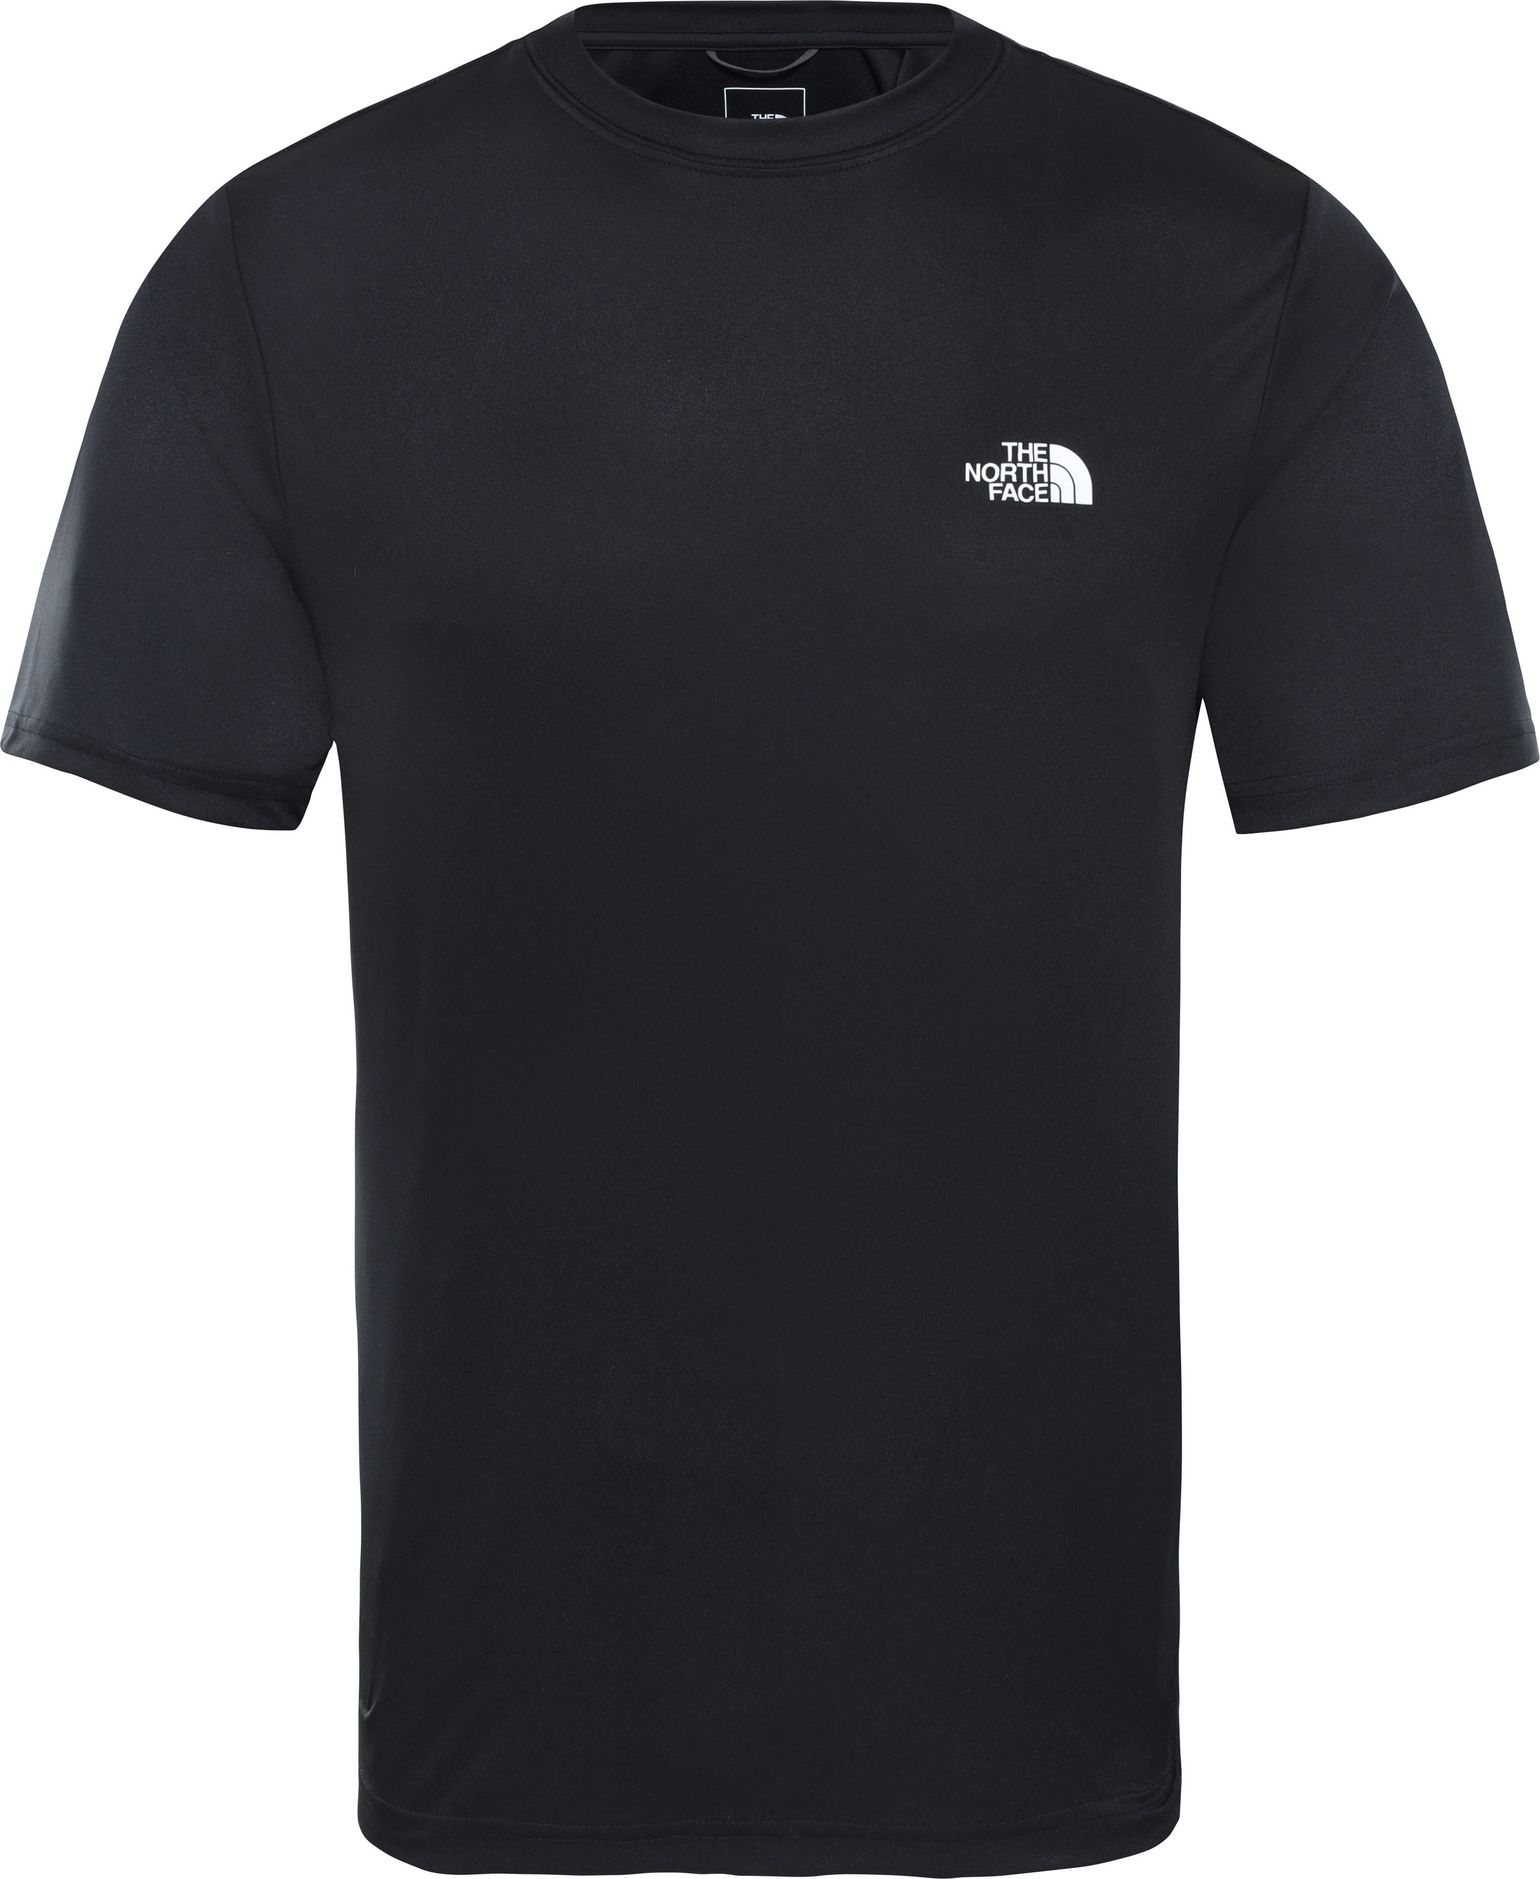 Men's Reaxion Amp T-Shirt TNF BLACK